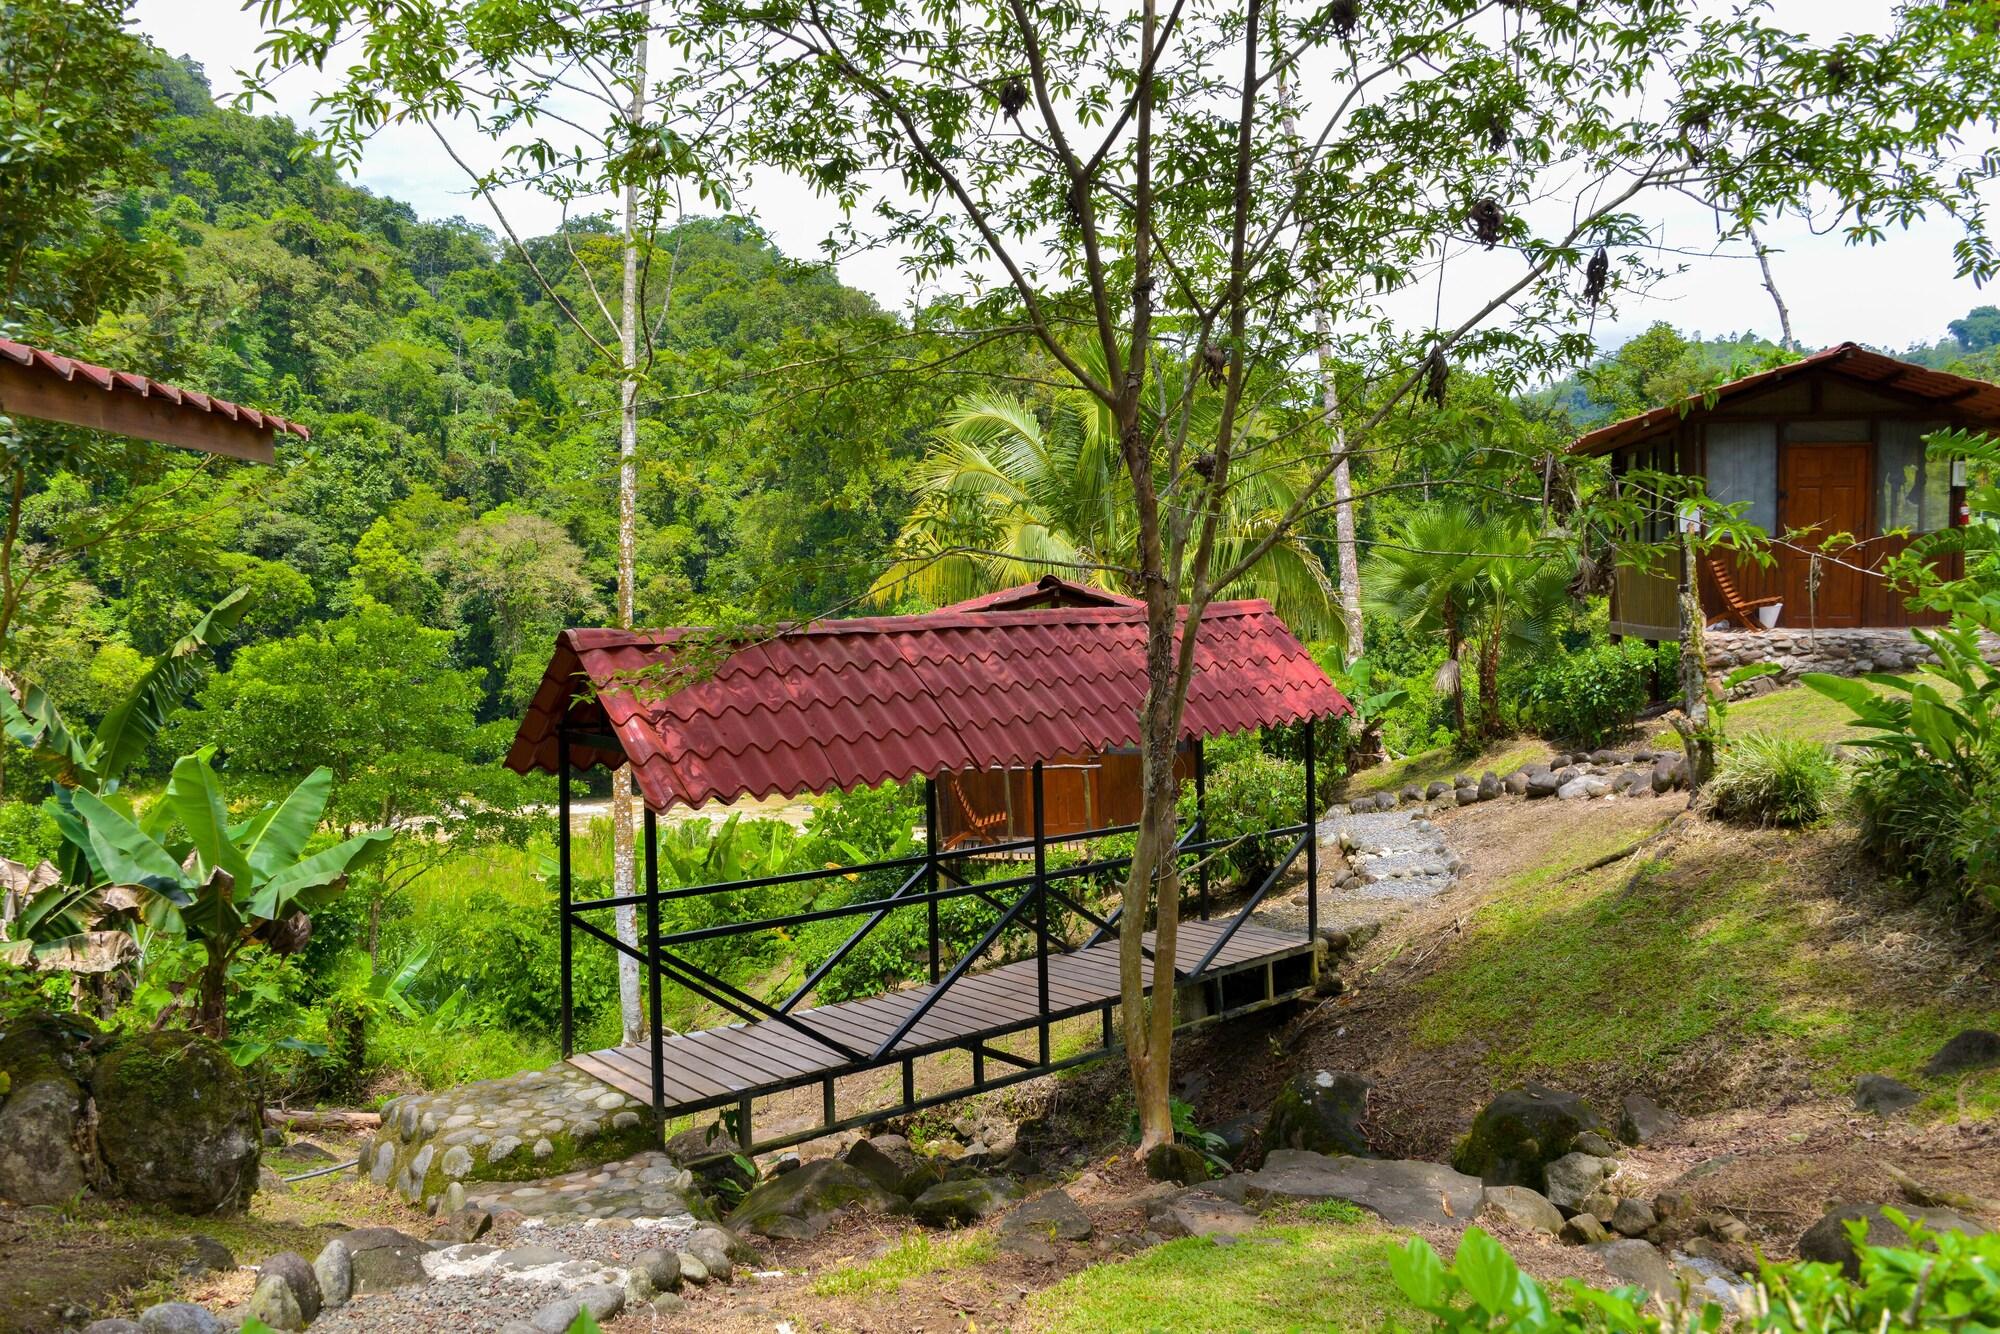 Quarto Pacuare River Lodge